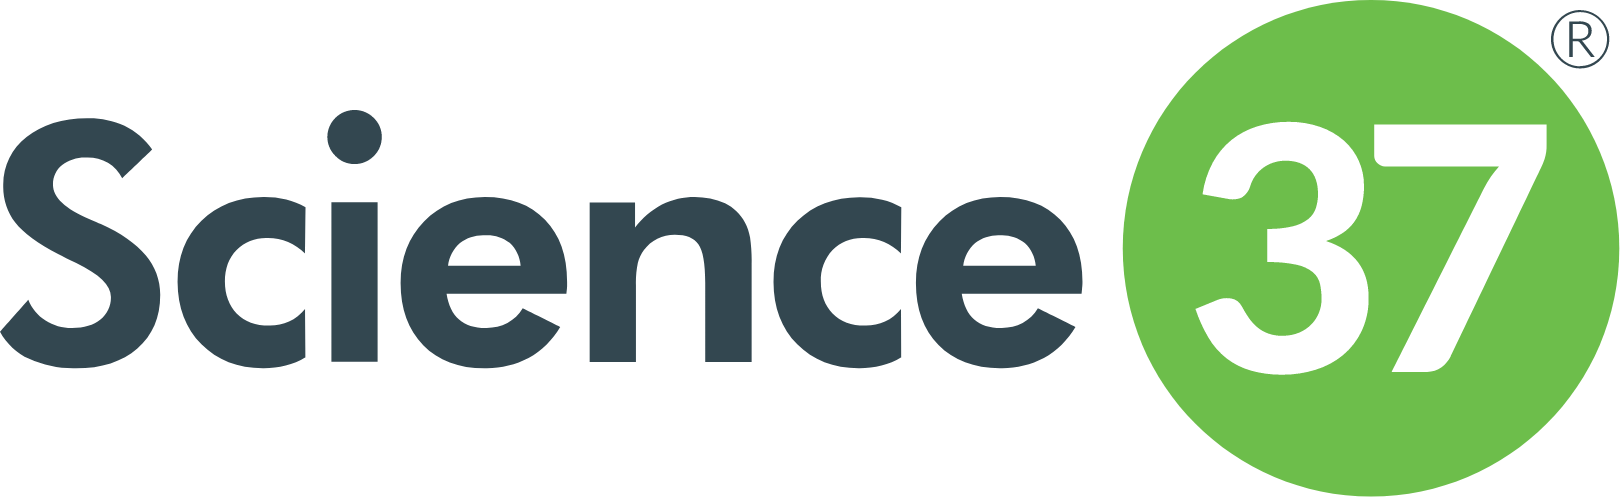 Science 37 logo large (transparent PNG)